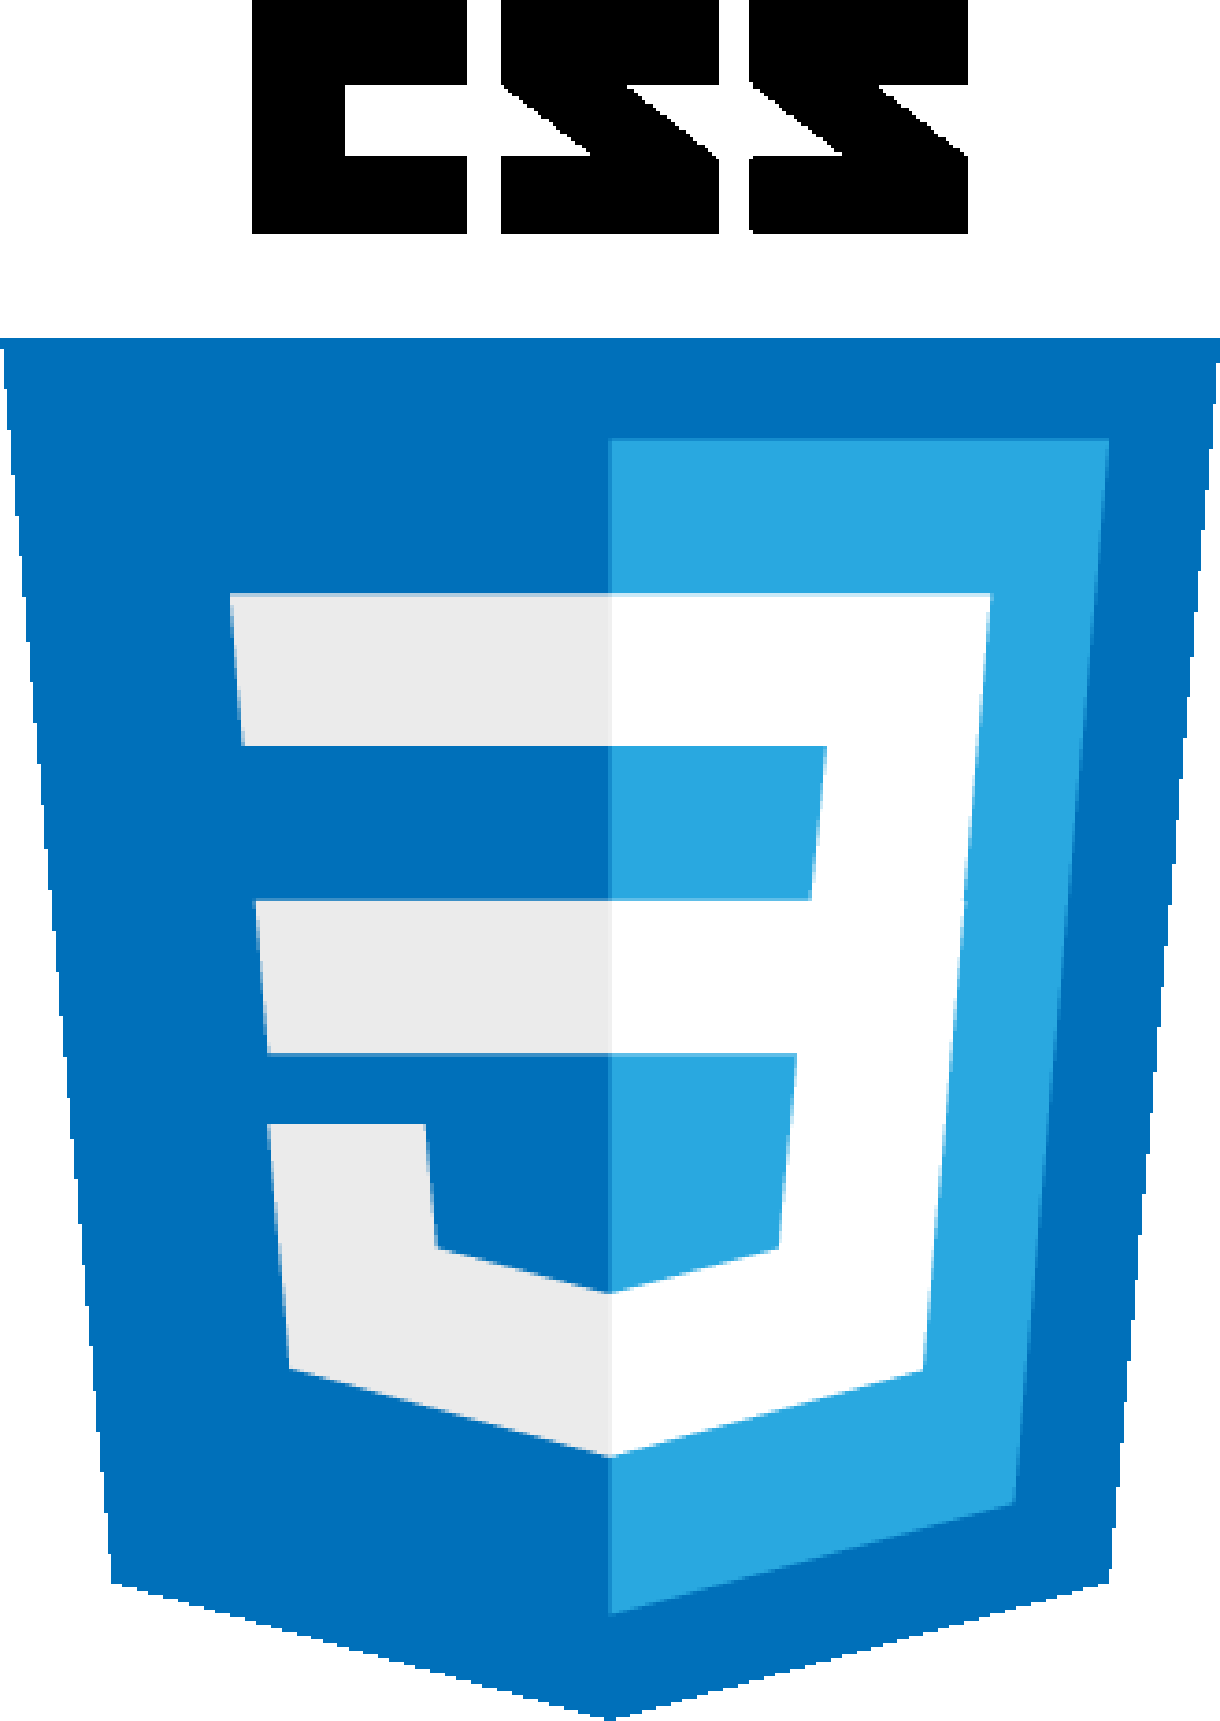 The CSS Logo